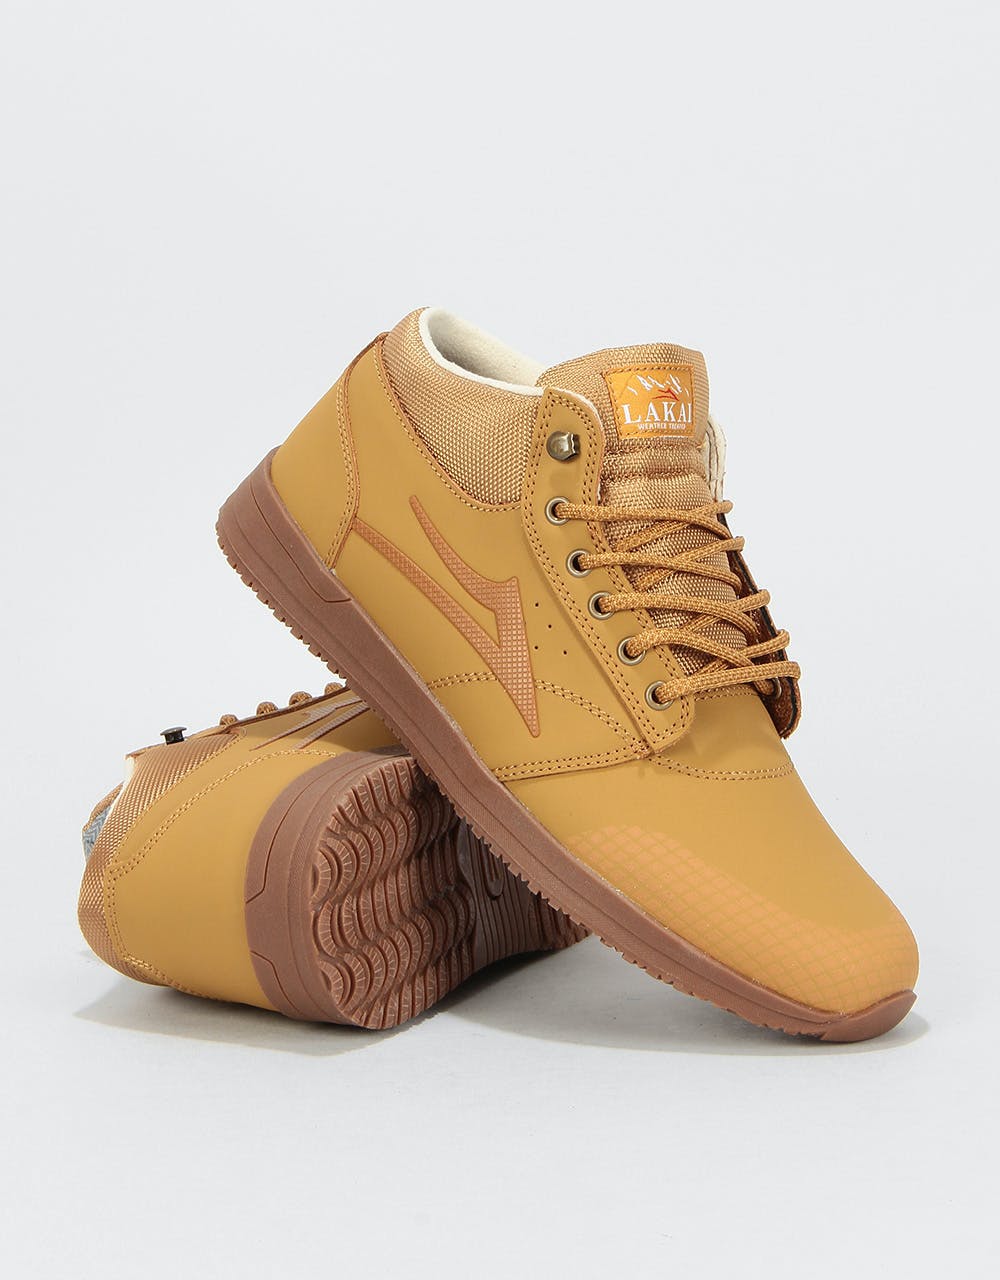 Lakai Griffin Mid WT Skate Shoes - Honey Nubuck